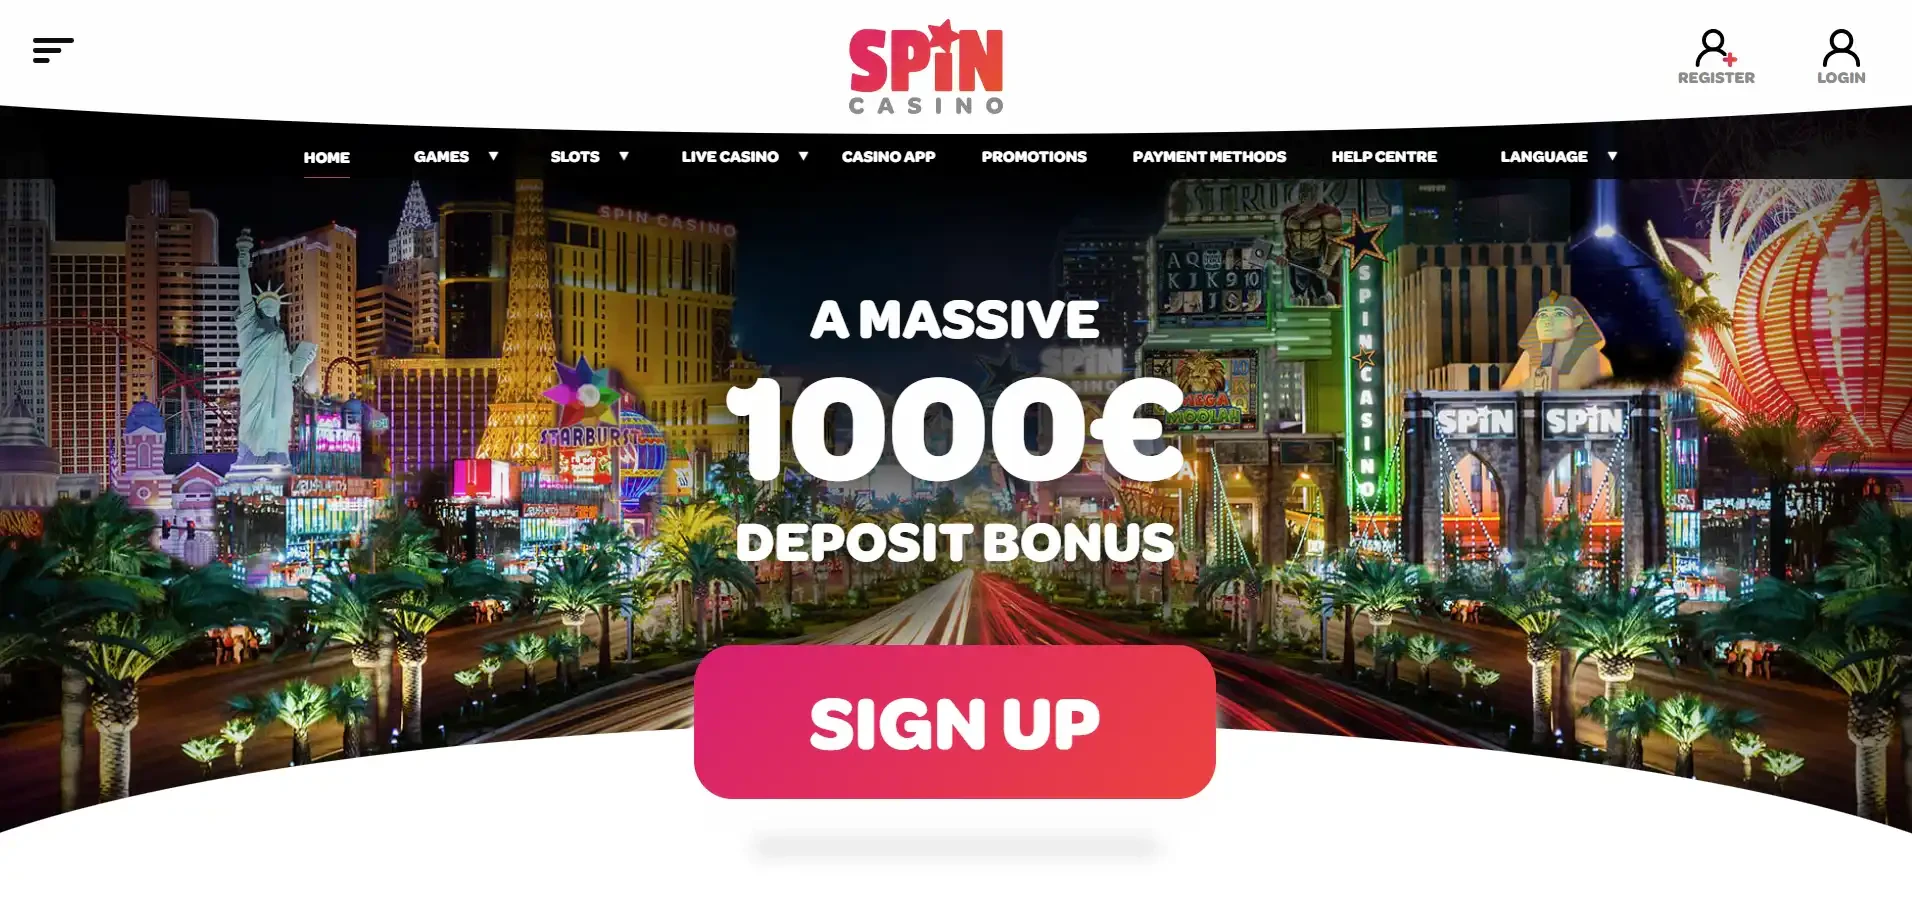 Spin Casino Welcome Bonus